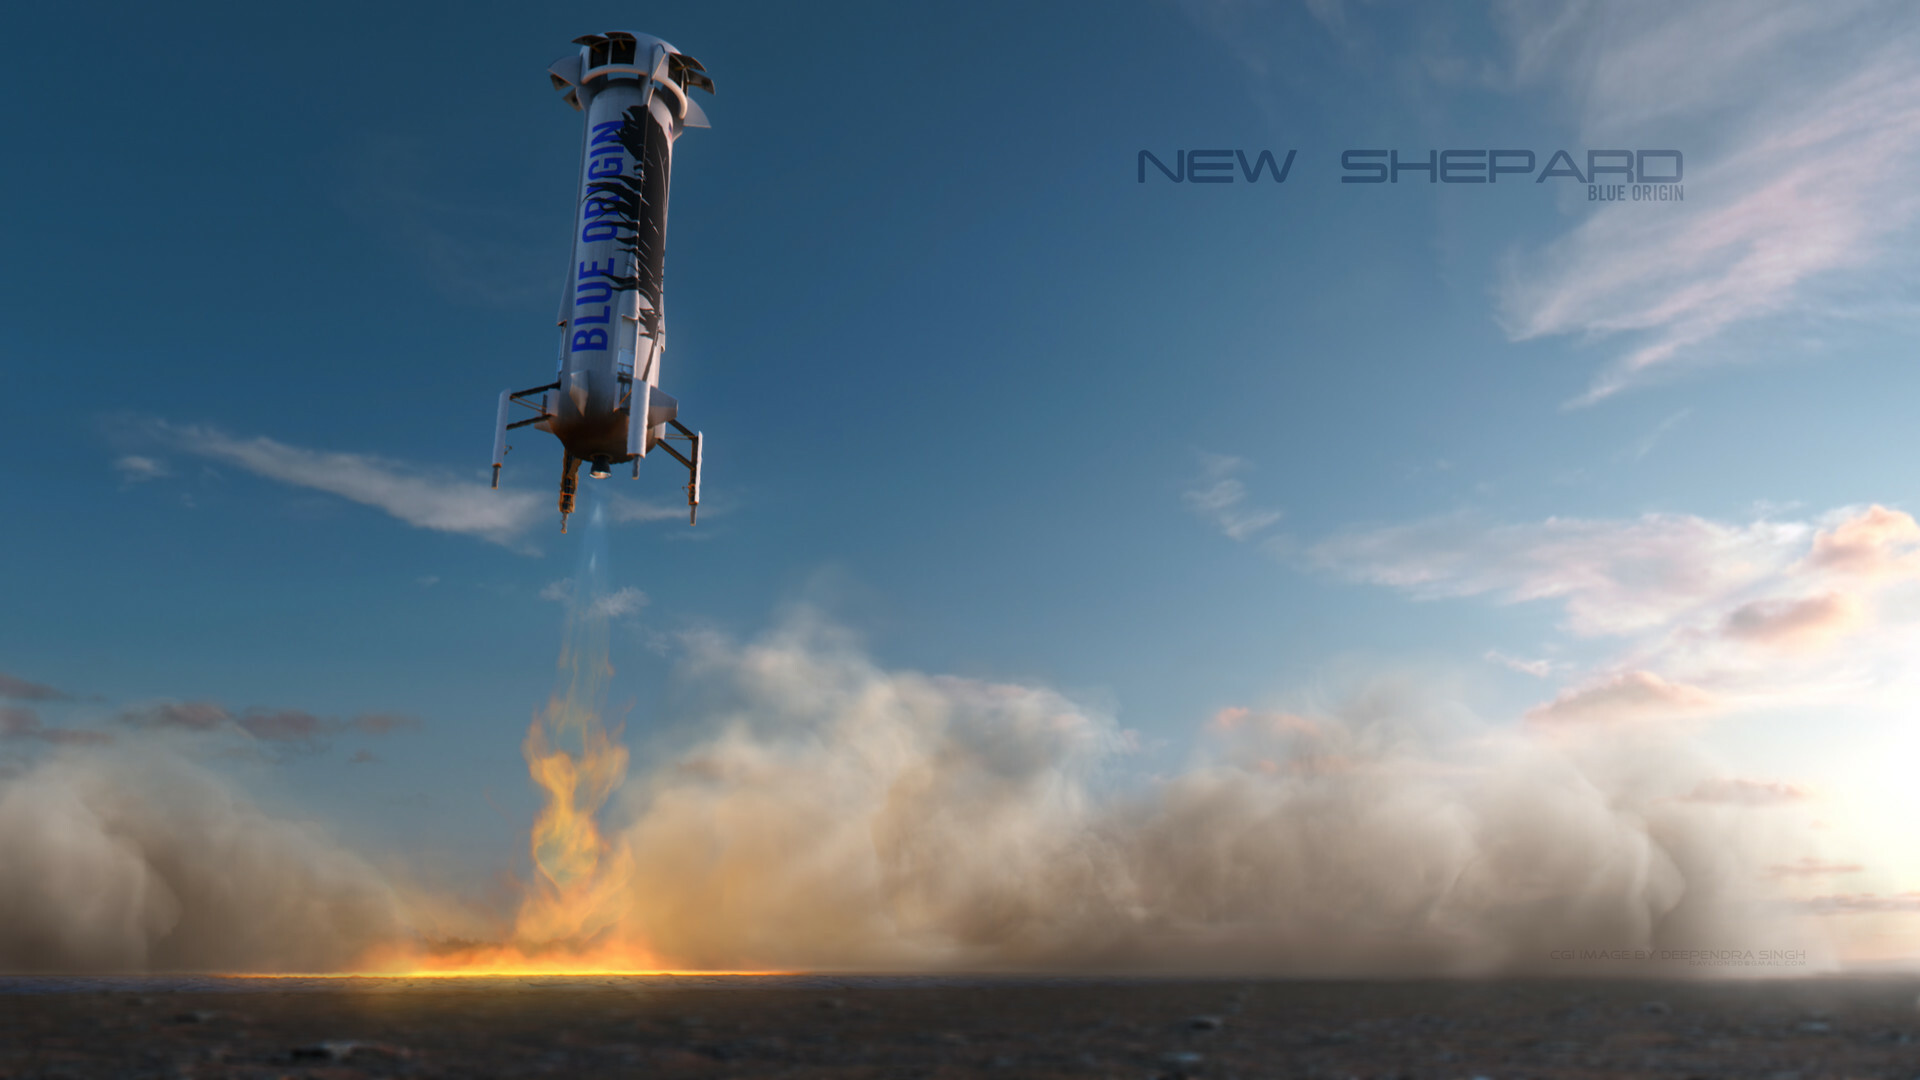 Blue Origin: New Shepard, Reusable suborbital rocket, Named after Mercury astronaut Alan Shepard. 1920x1080 Full HD Wallpaper.